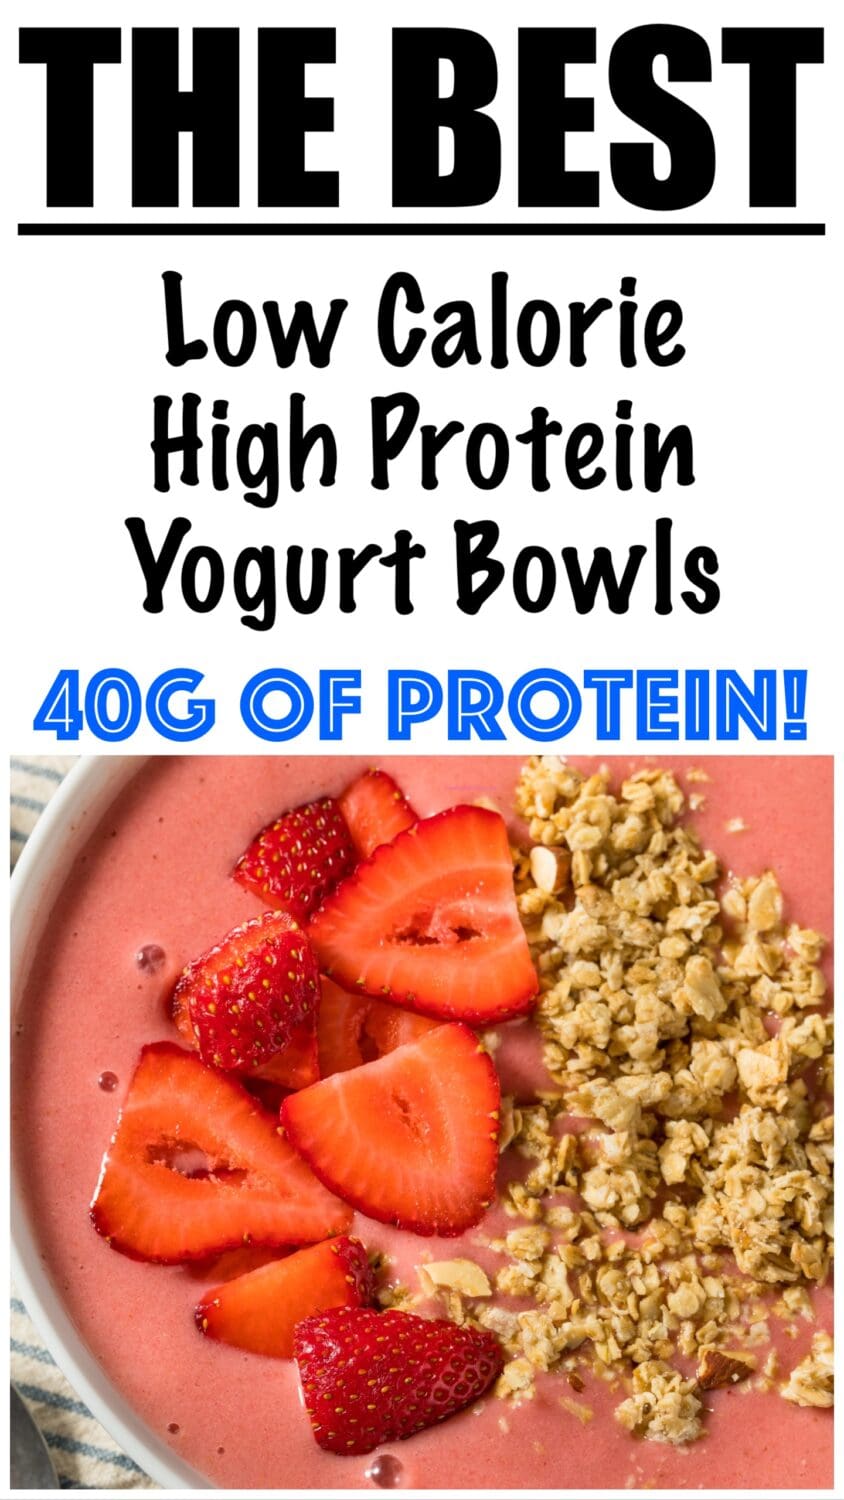 Low Calorie High Protein Yogurt Bowls